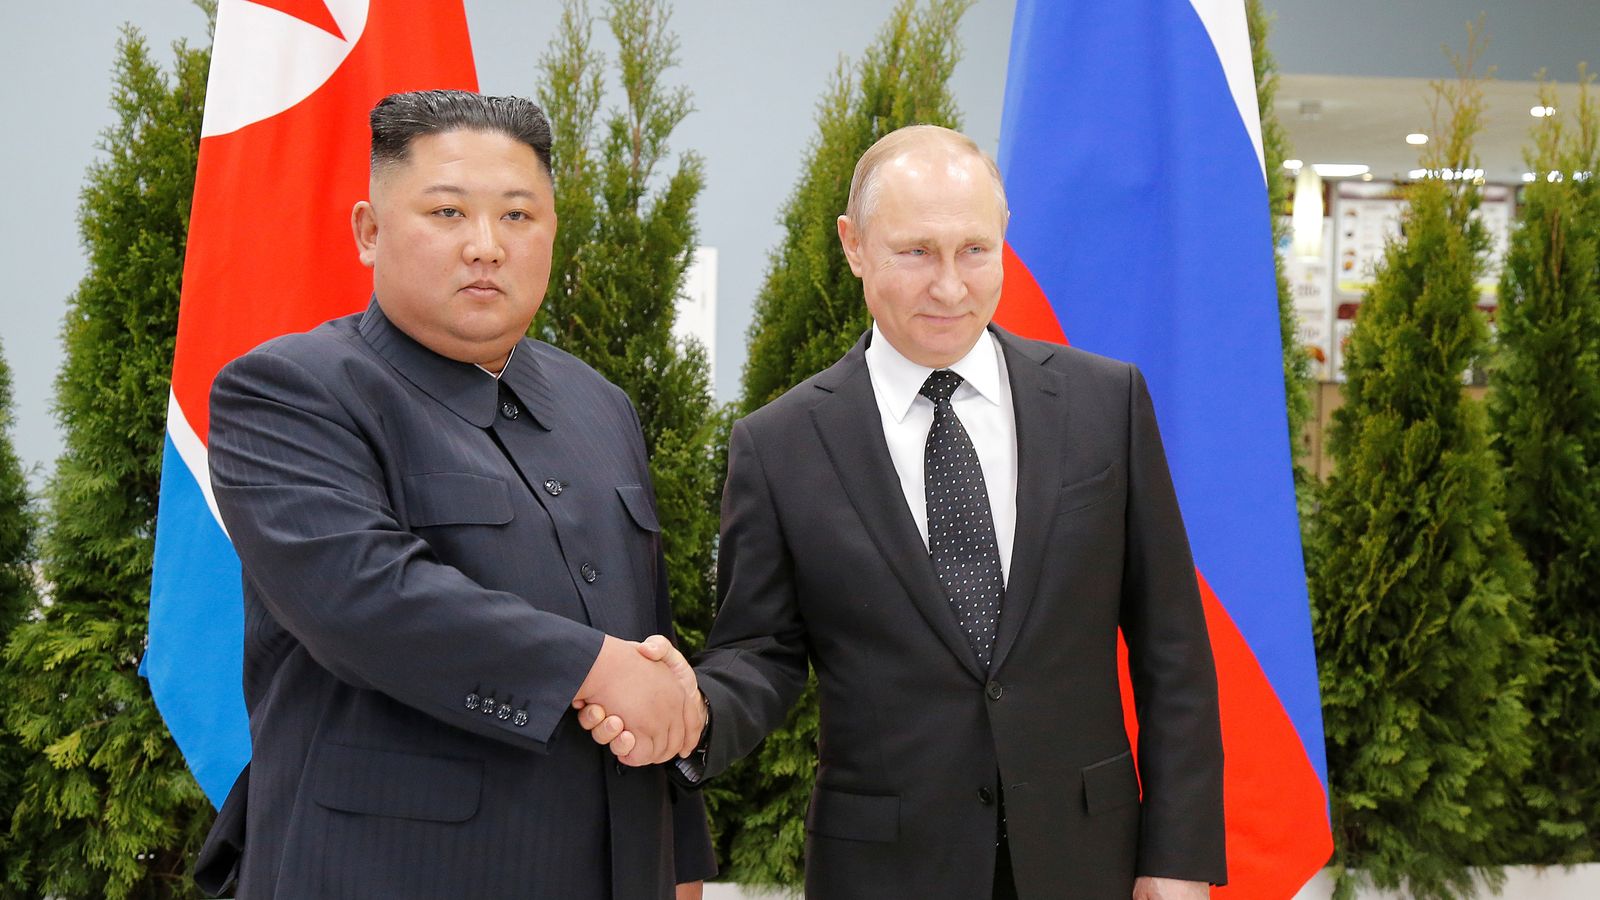 Kim Jong Un And Vladimir Putin Meet For First Summit In